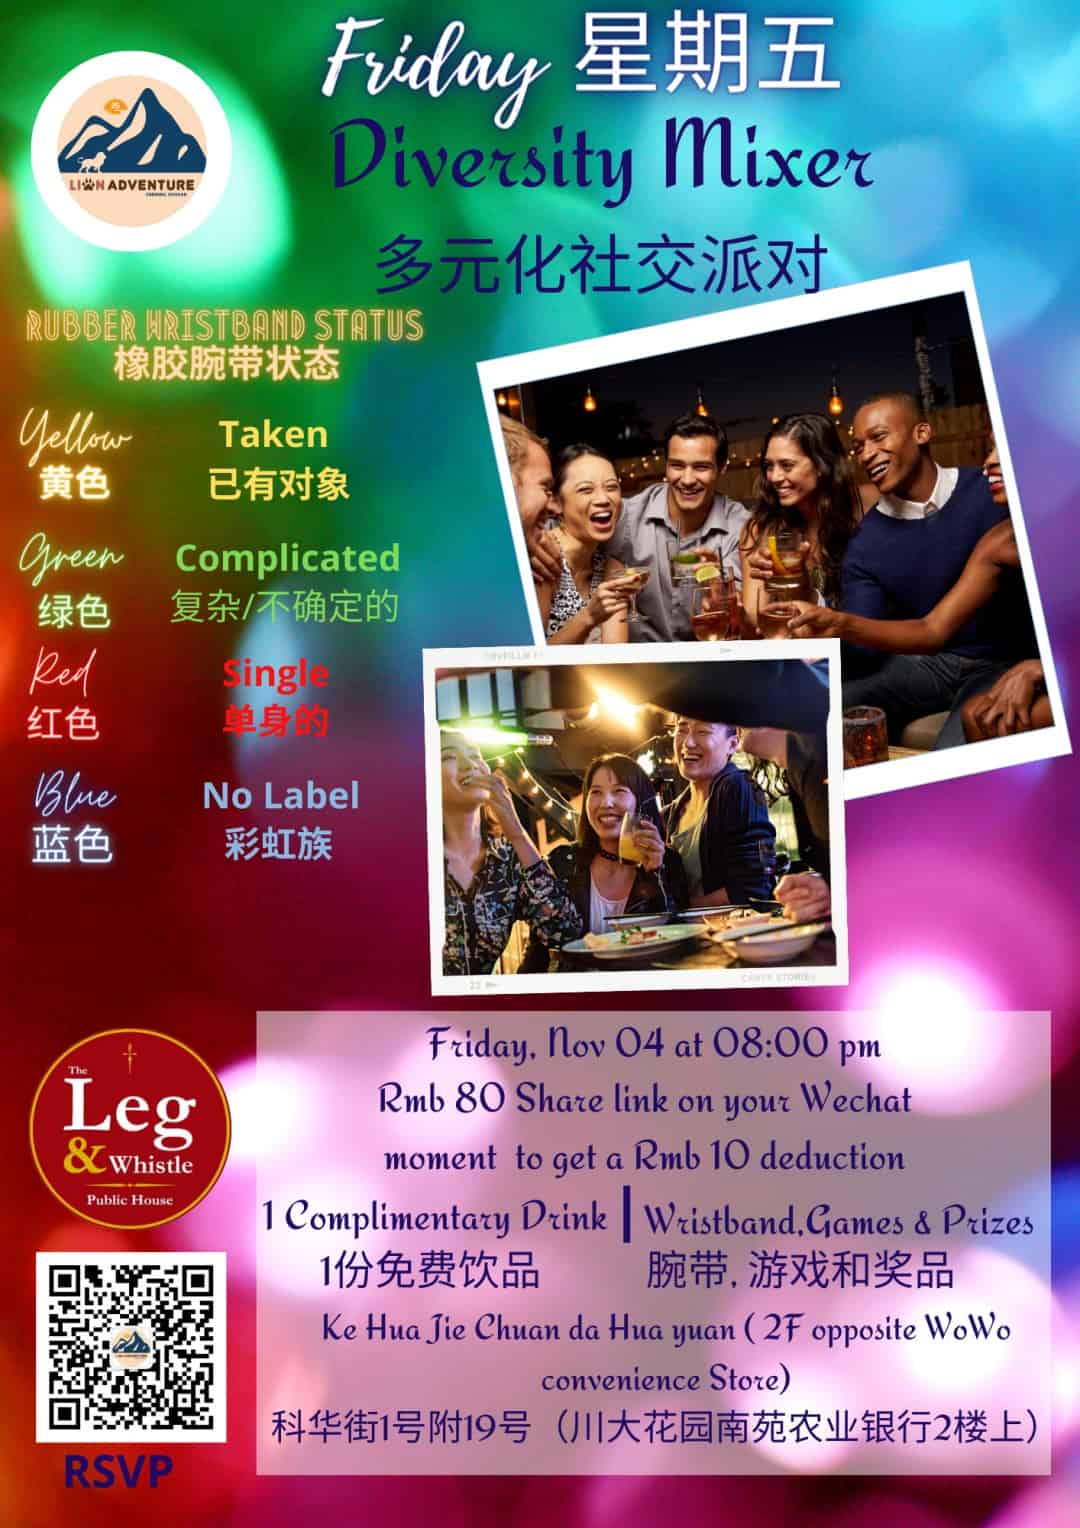 Diversity Mixer Night Vol.II chengdu expat 1